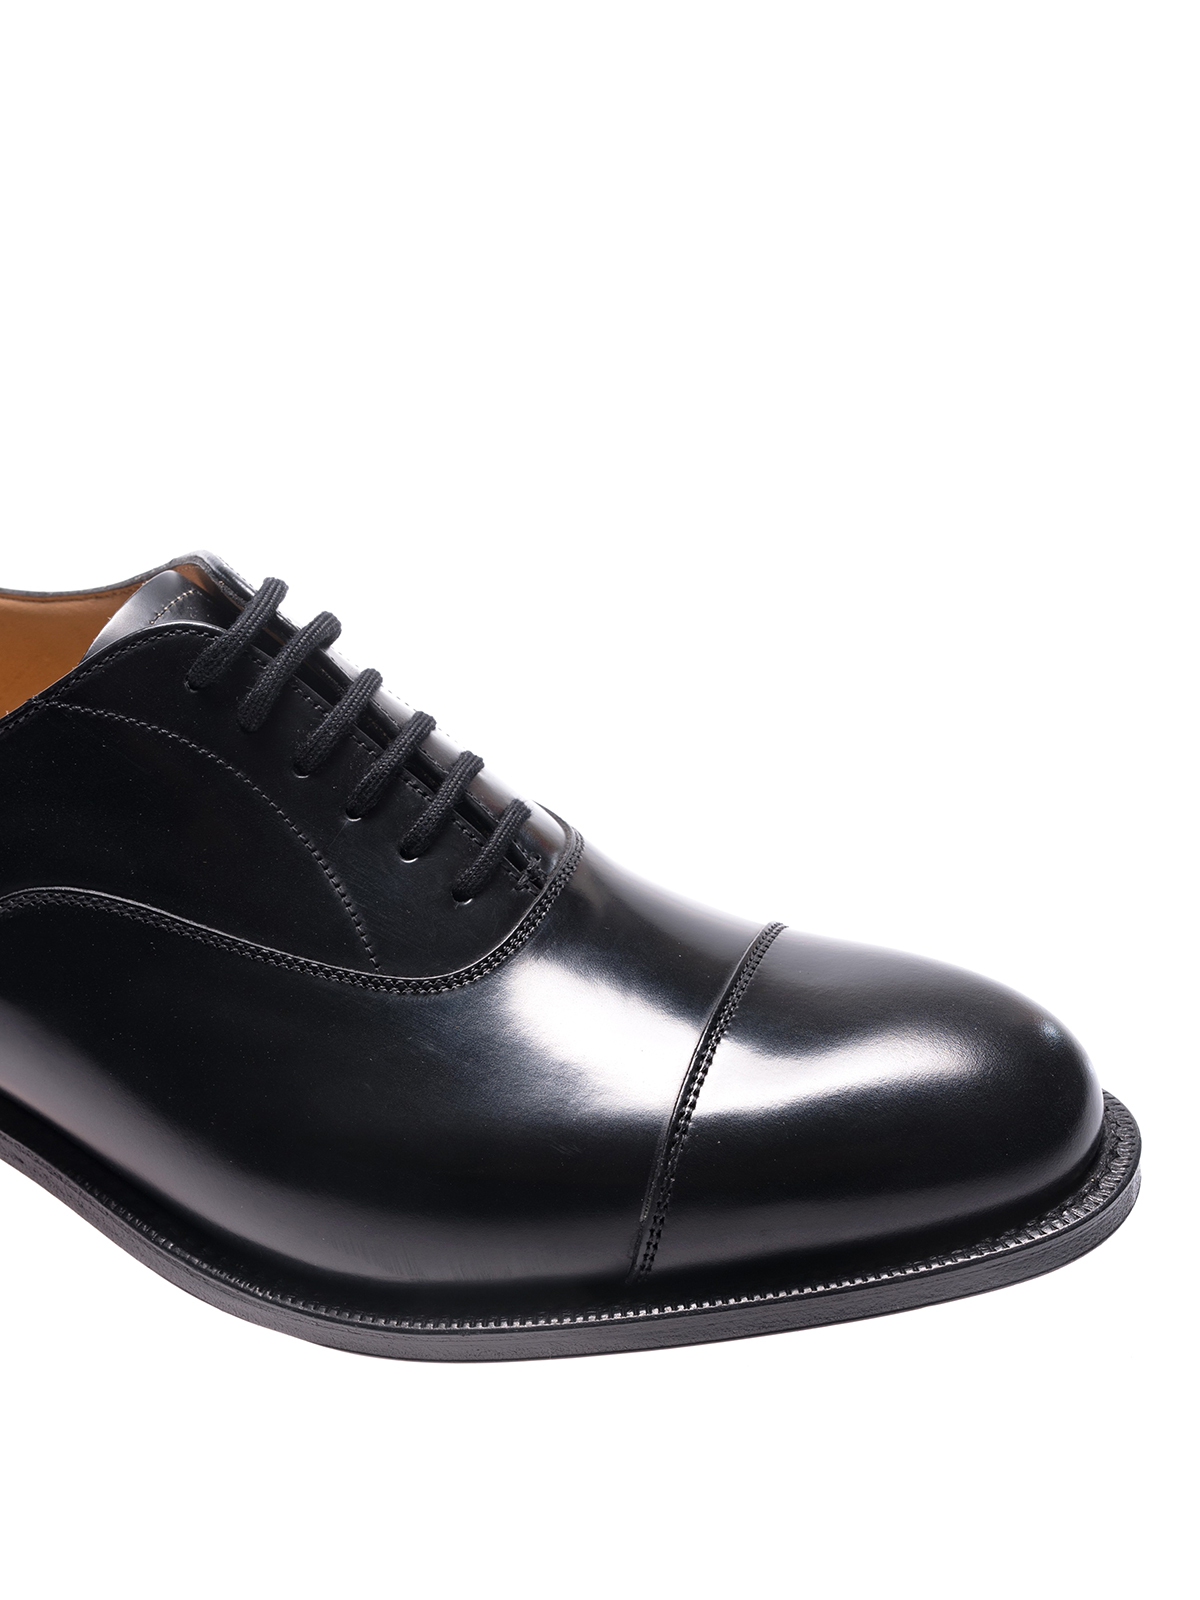 Dubai black leather Oxford shoes 